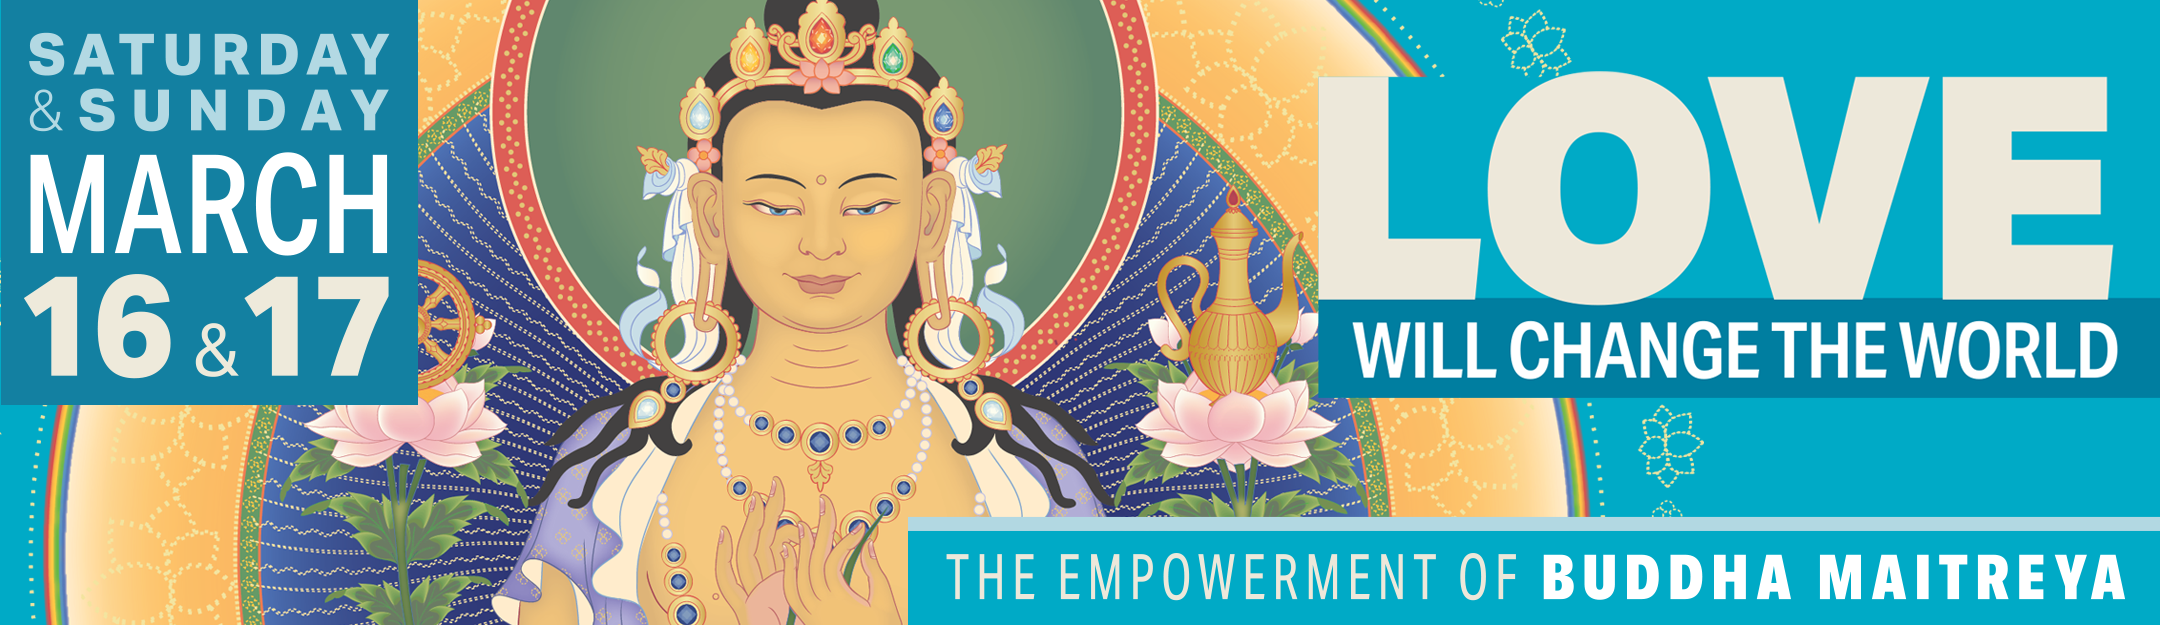 Love Will Change the World: The Empowerment of Buddha Maitreya and Teachings on Loving-Kindness